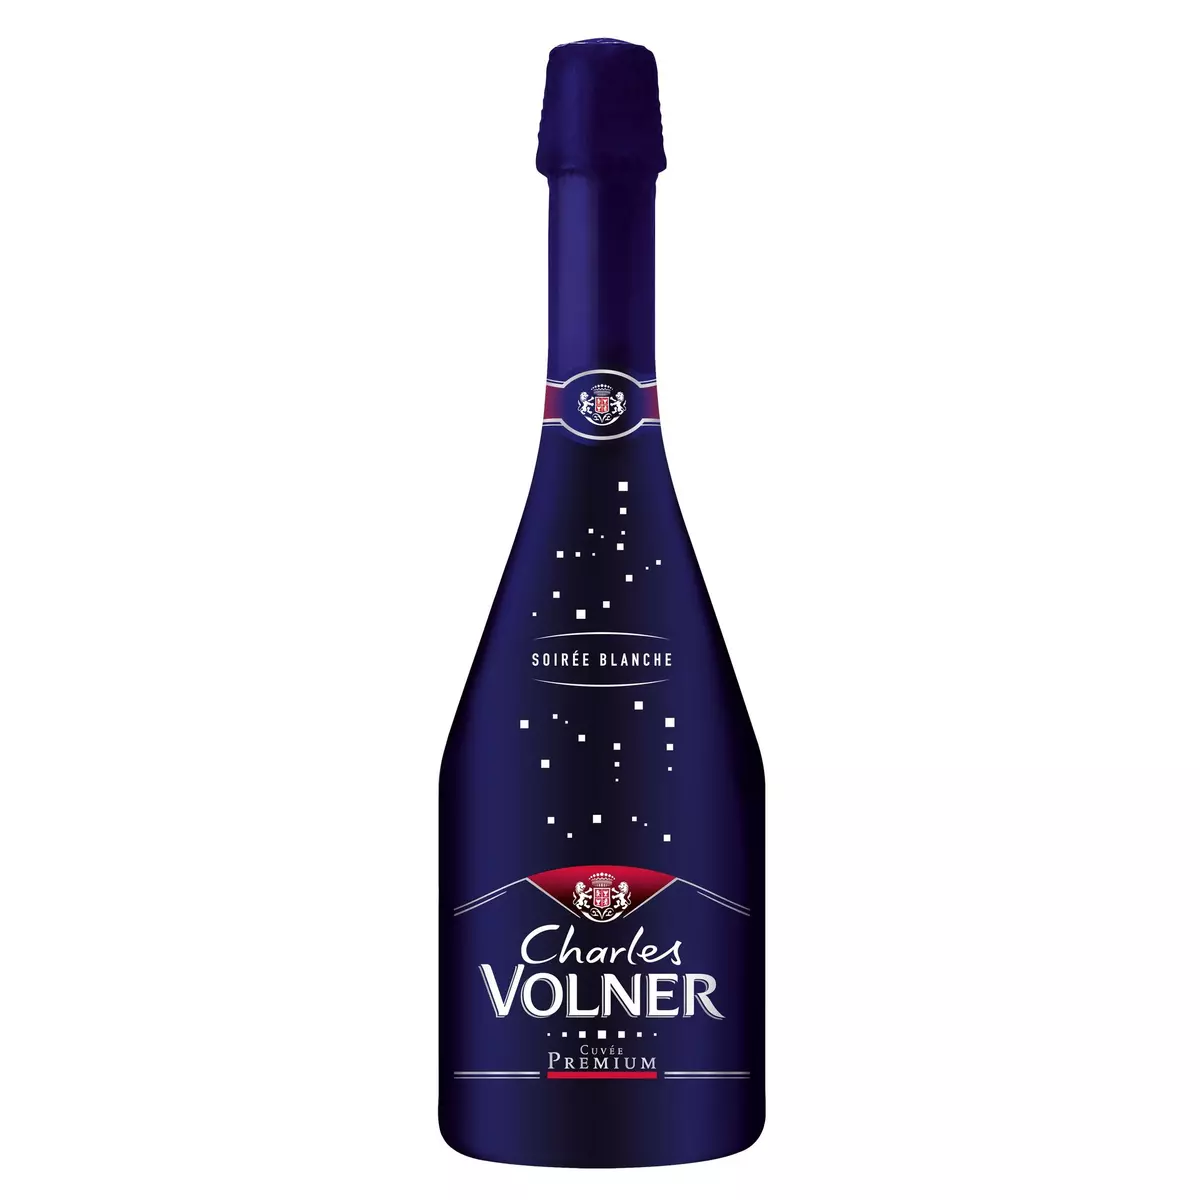 CHARLES VOLNER Vin effervescent "soirée blanche" cuvée Premium 75cl